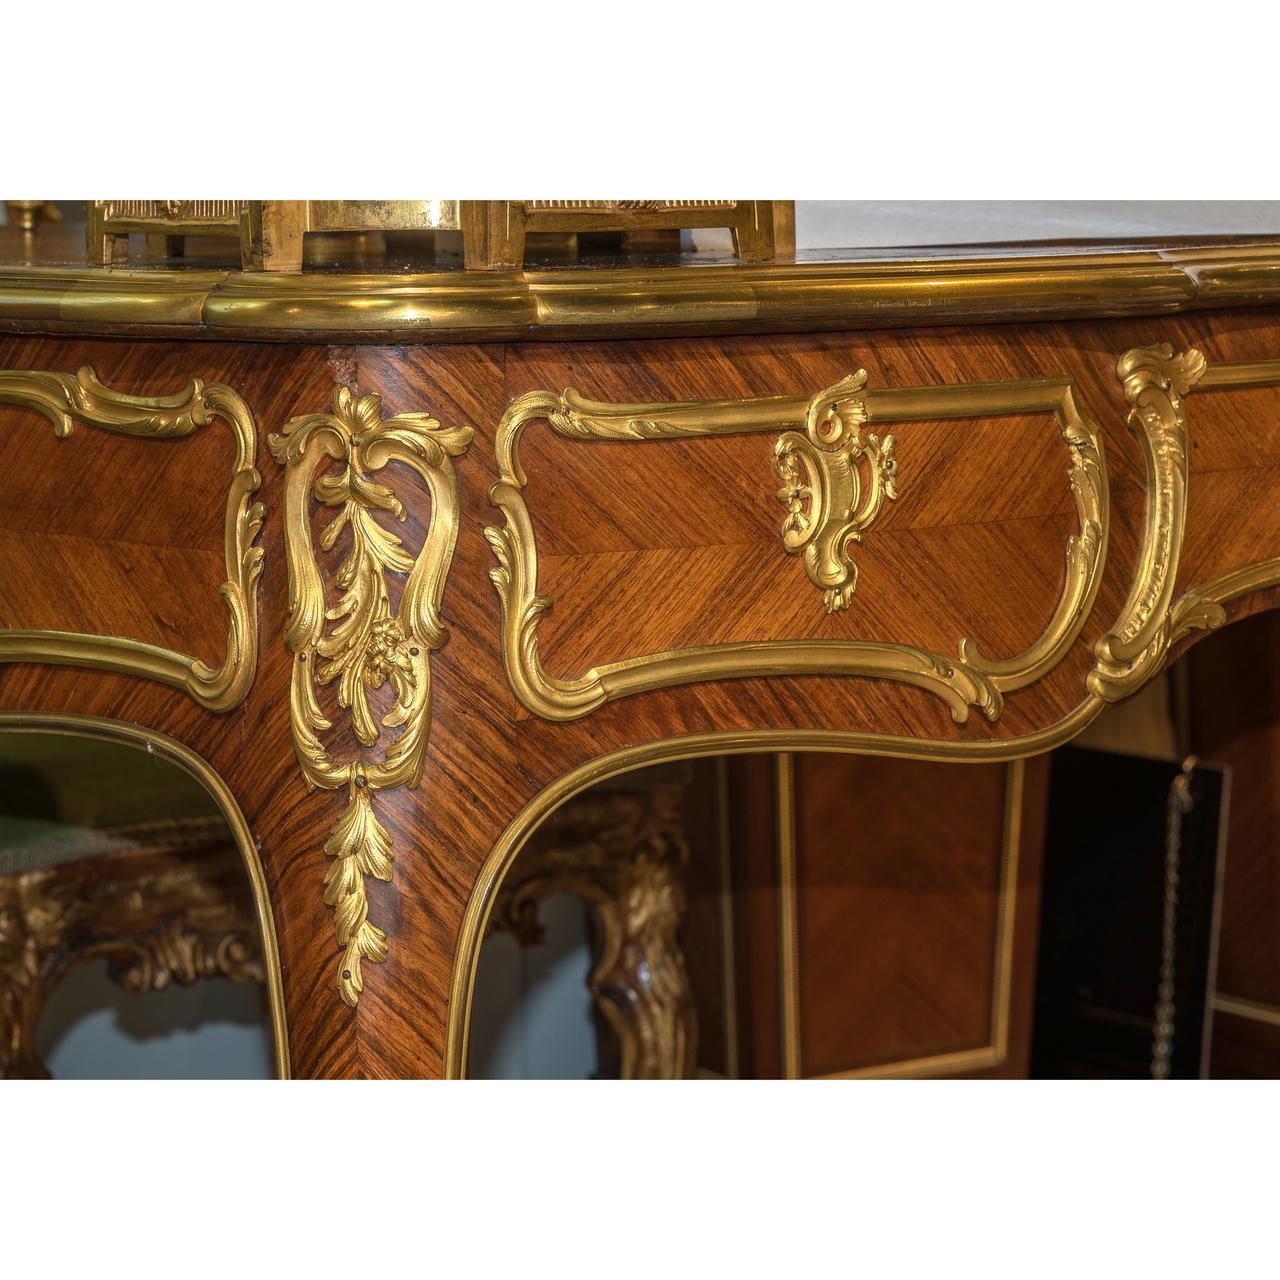 Tulipwood 19th Century French Louis XV Style Ormolu Mounted Kingwood Bureau Plat